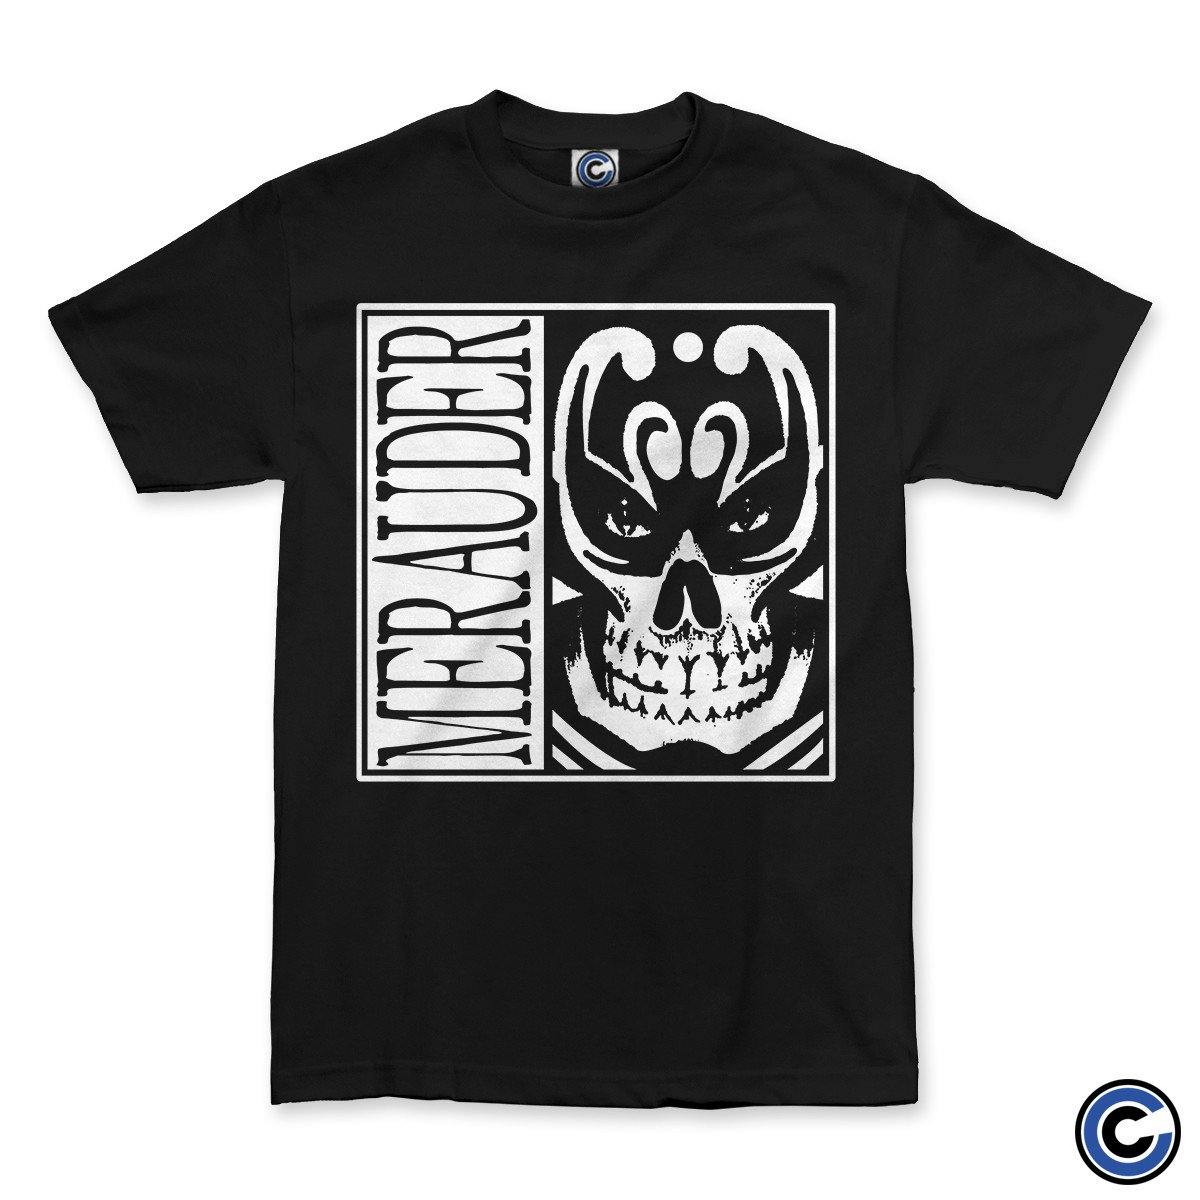 Buy – Merauder "Skull" Shirt – Band & Music Merch – Cold Cuts Merch